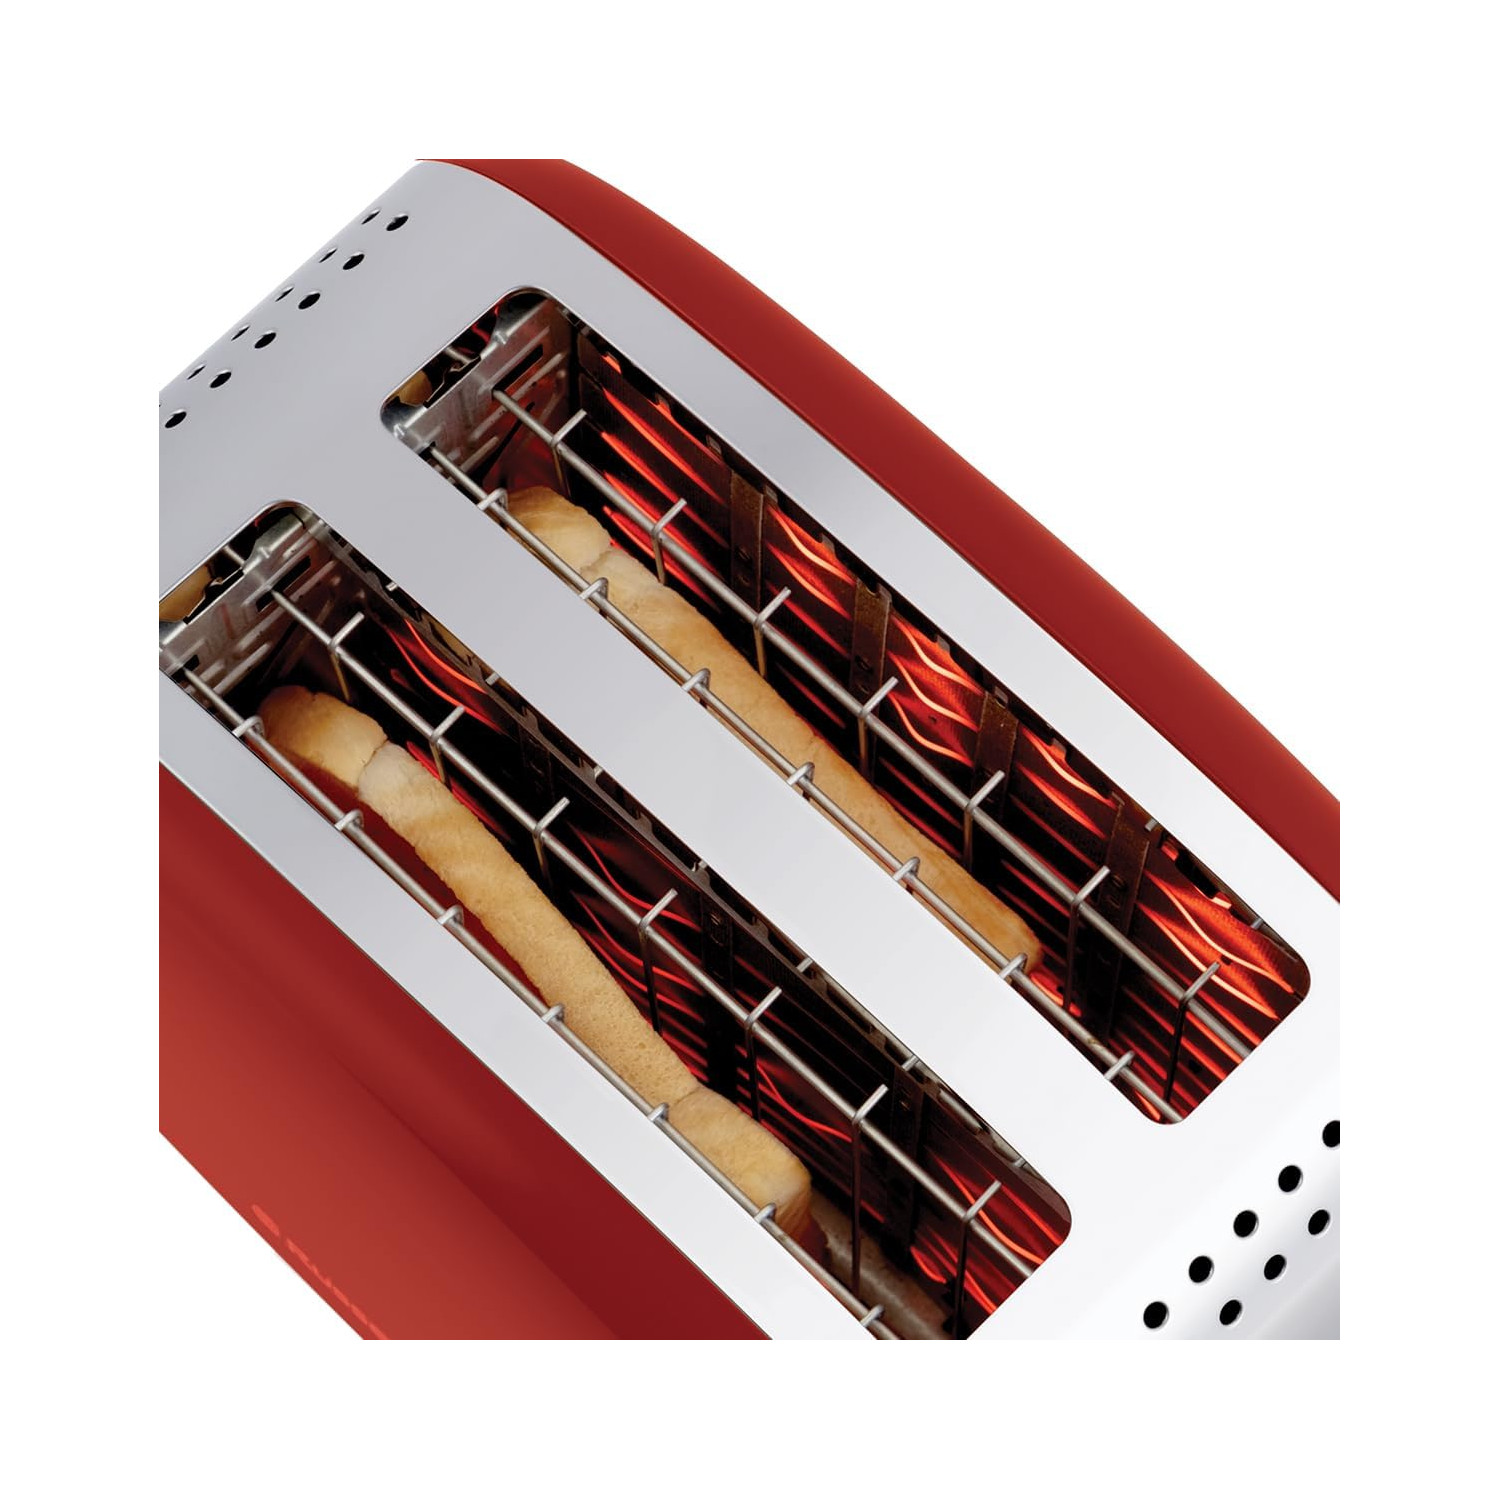 Schlitze: 26554-56 RUSSELL Plus (1600 Rot Colours Watt, Rot Toaster HOBBS 2)